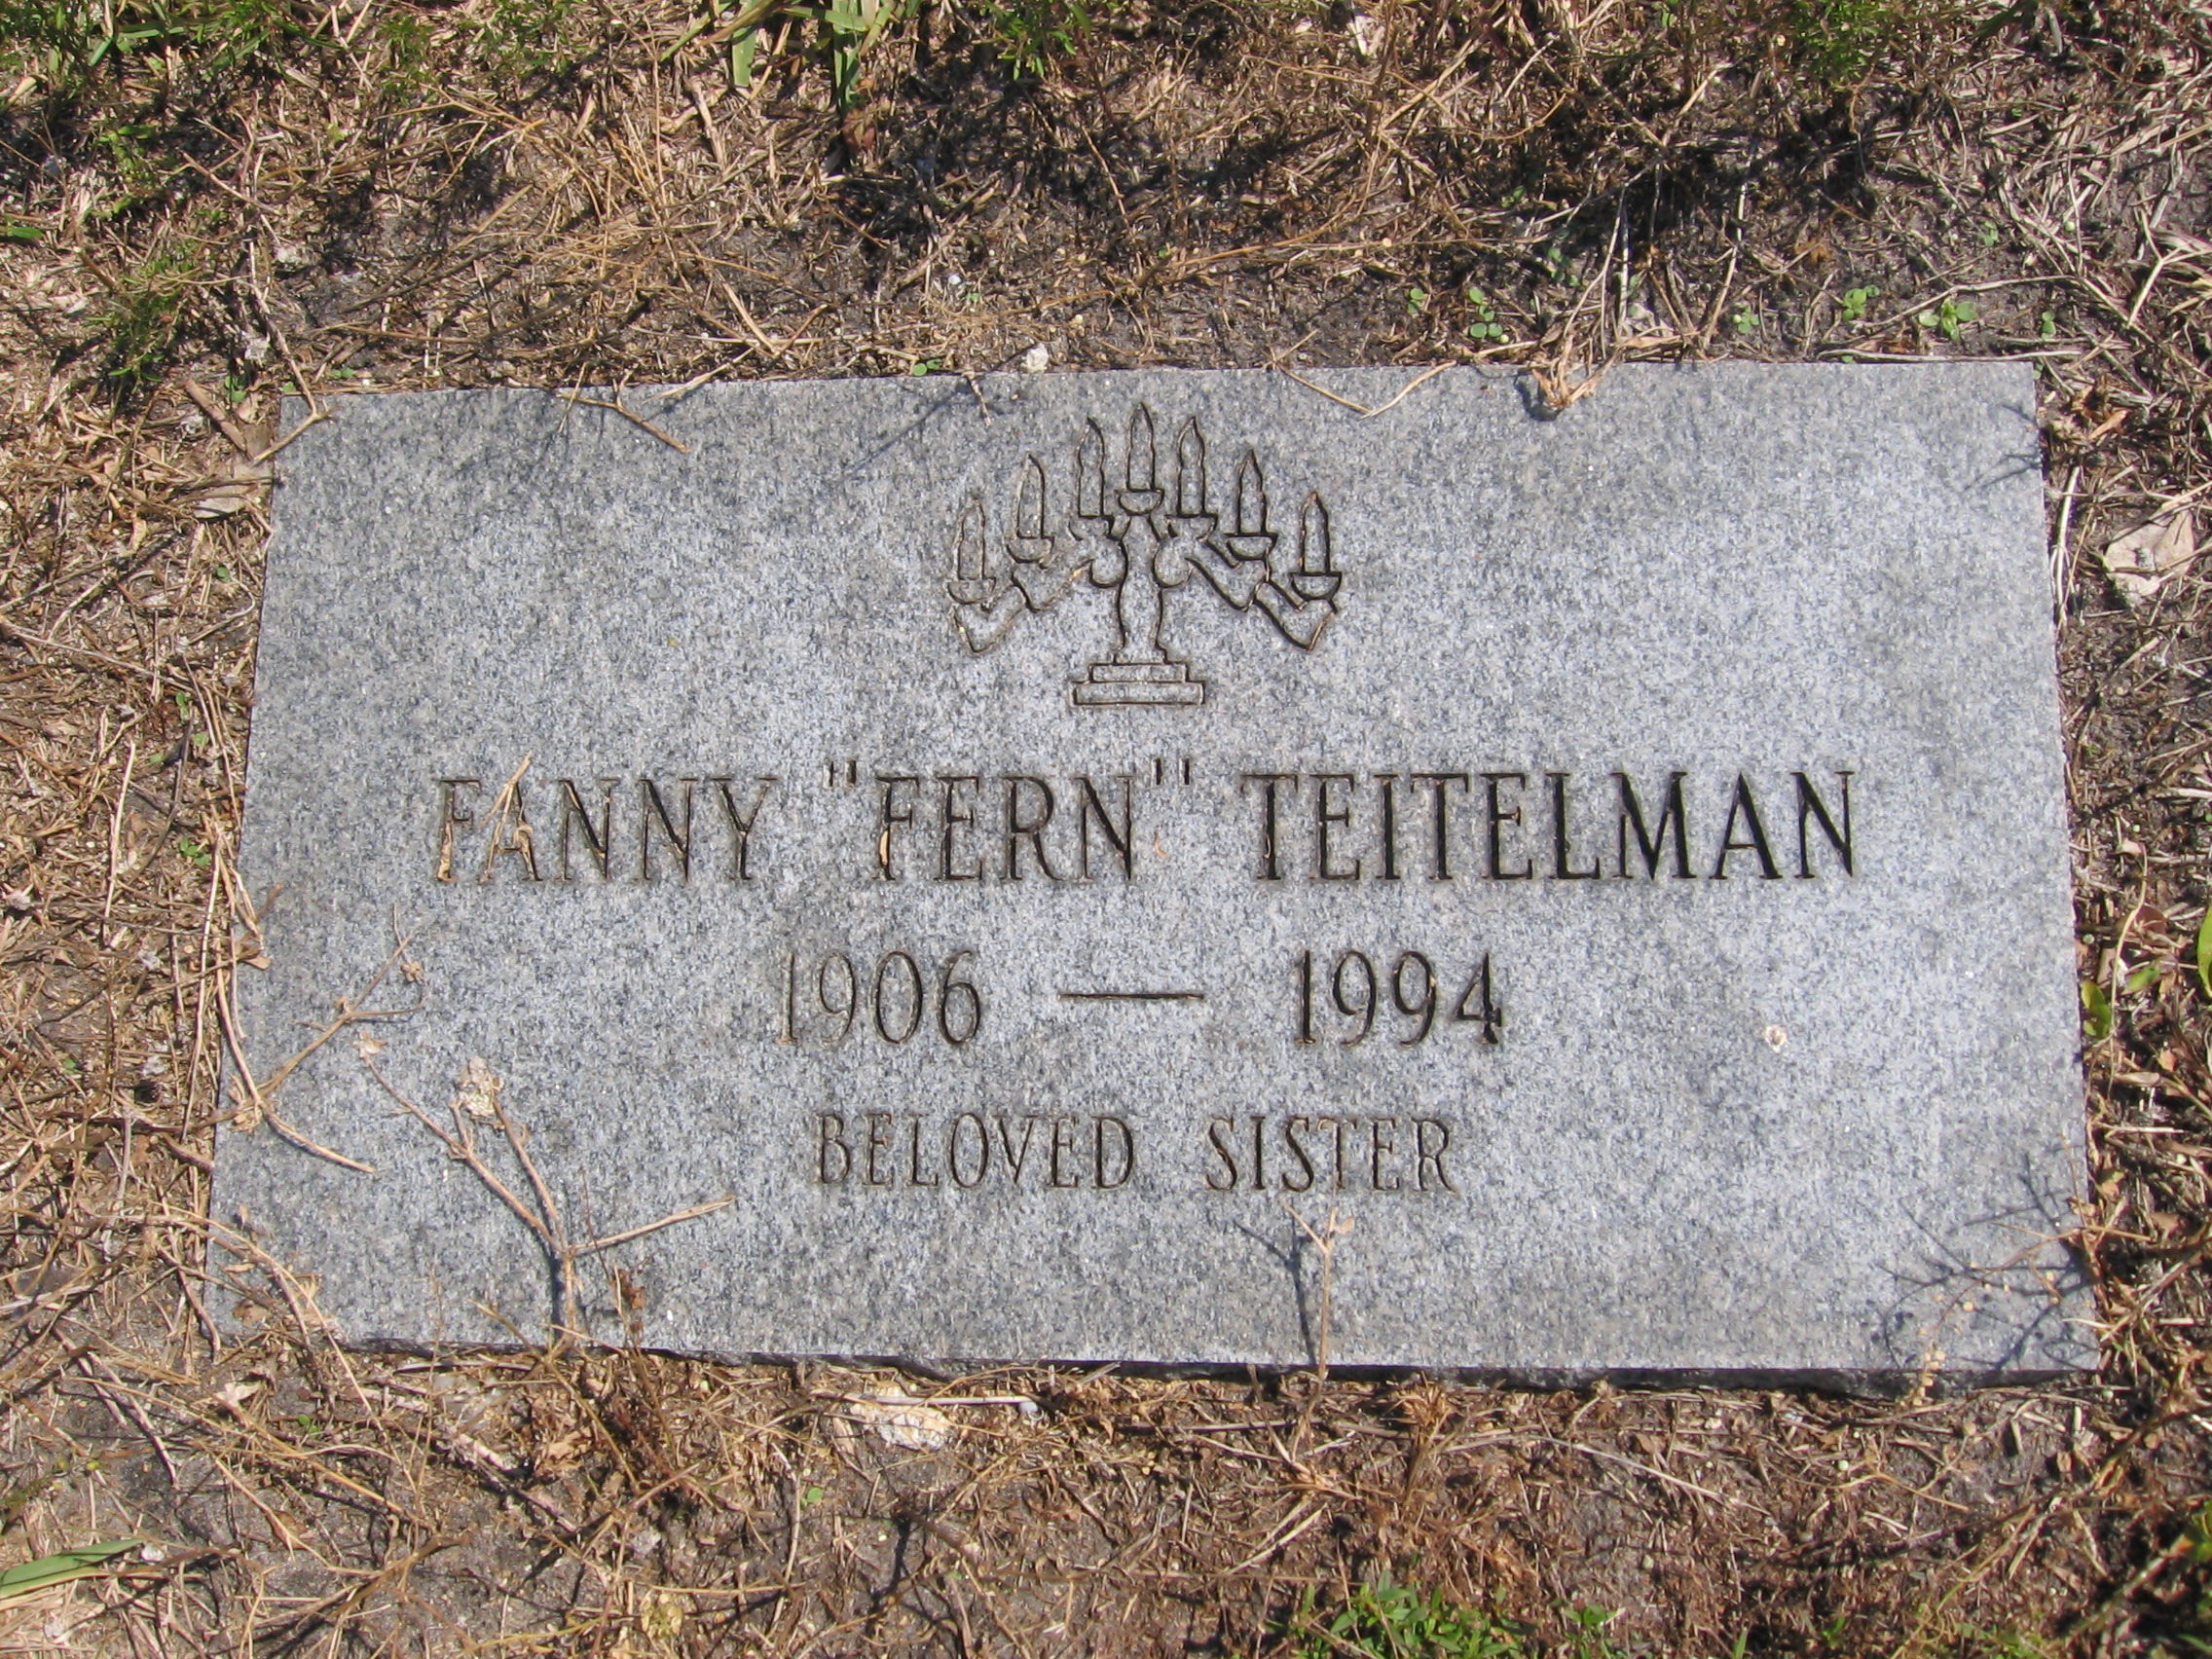 Fanny "Fern" Teitelman